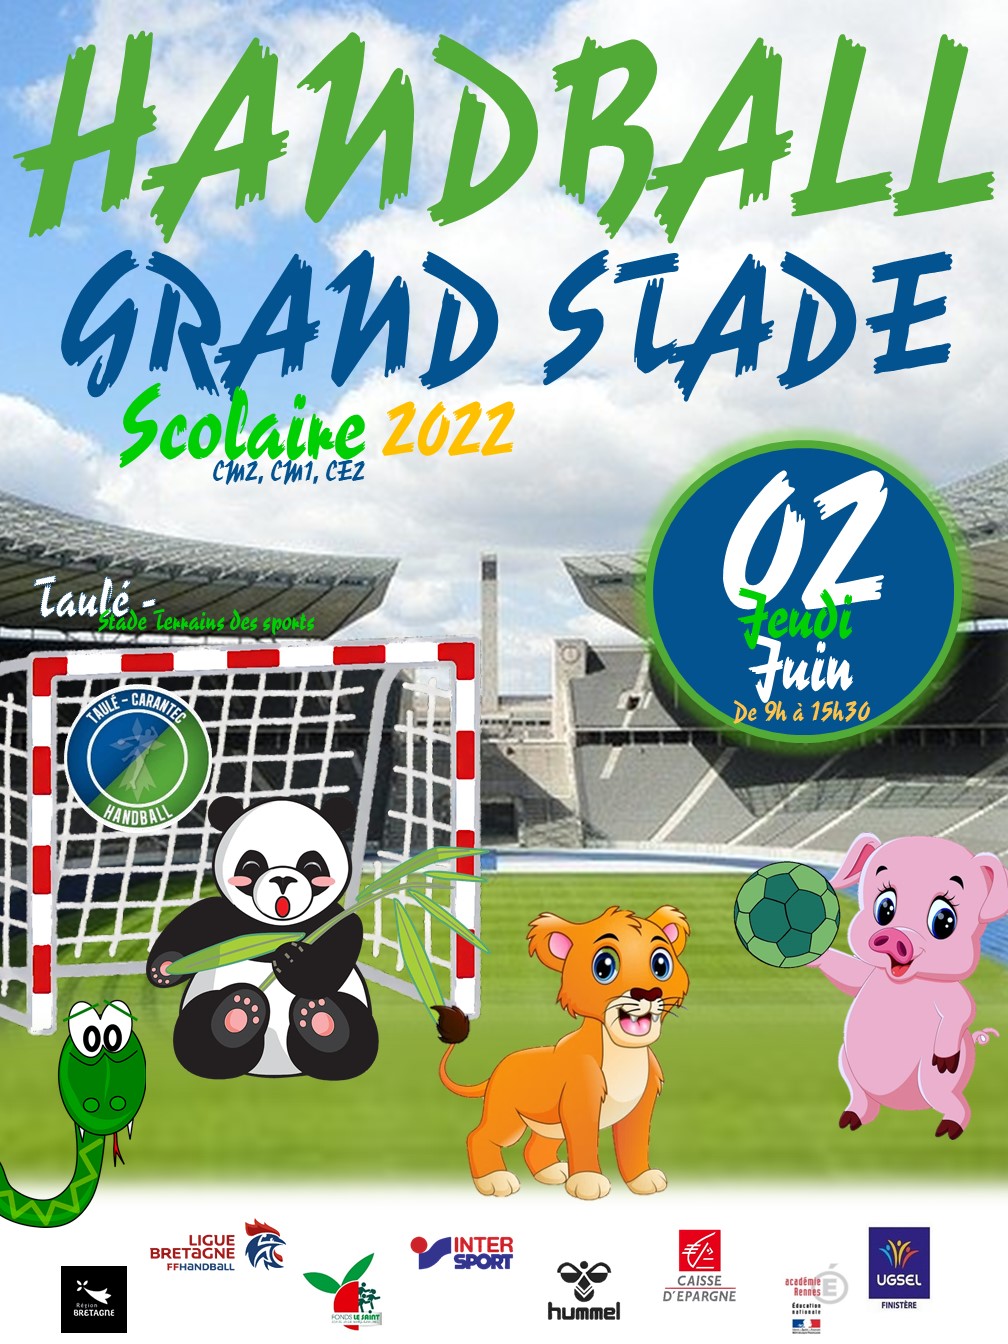 Grand_Stade_Sco_UGSEL_29_Taule.JPG